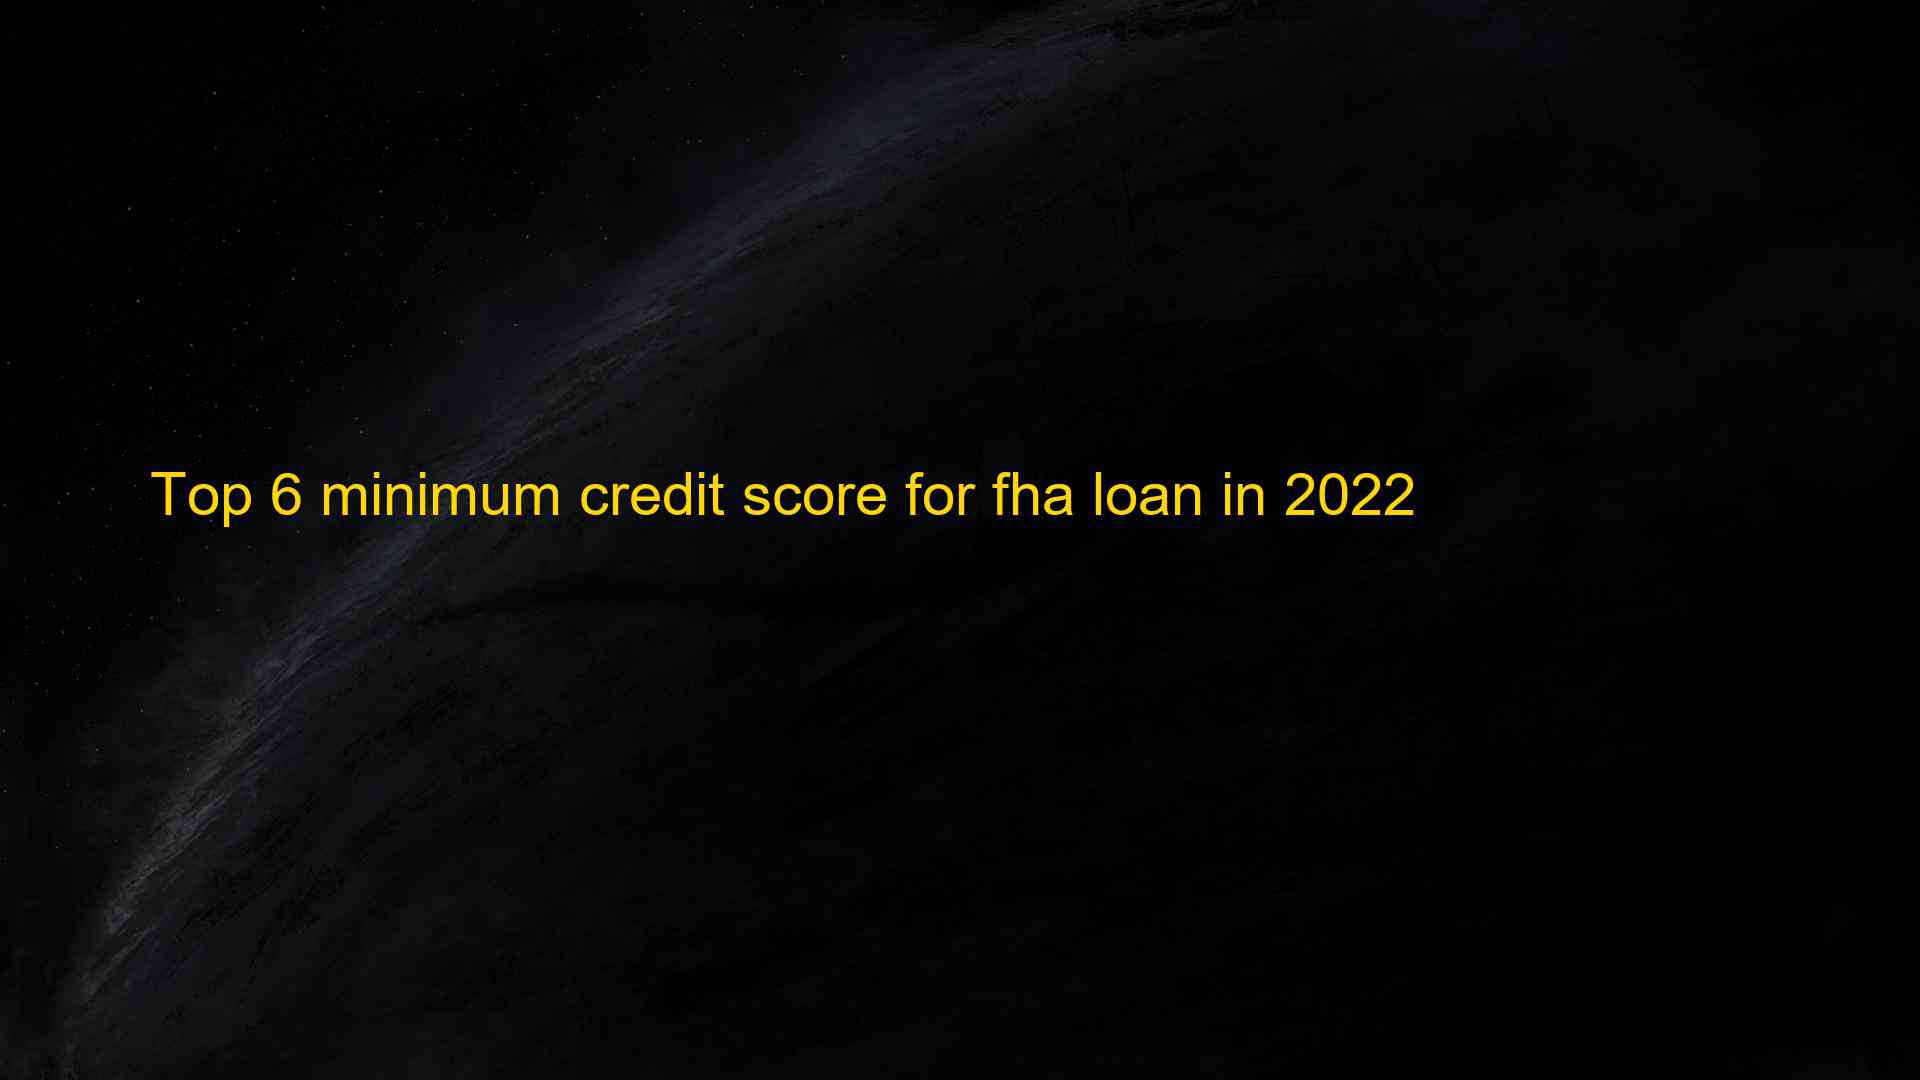 Top 6 minimum credit score for fha loan in 2022 1660191590